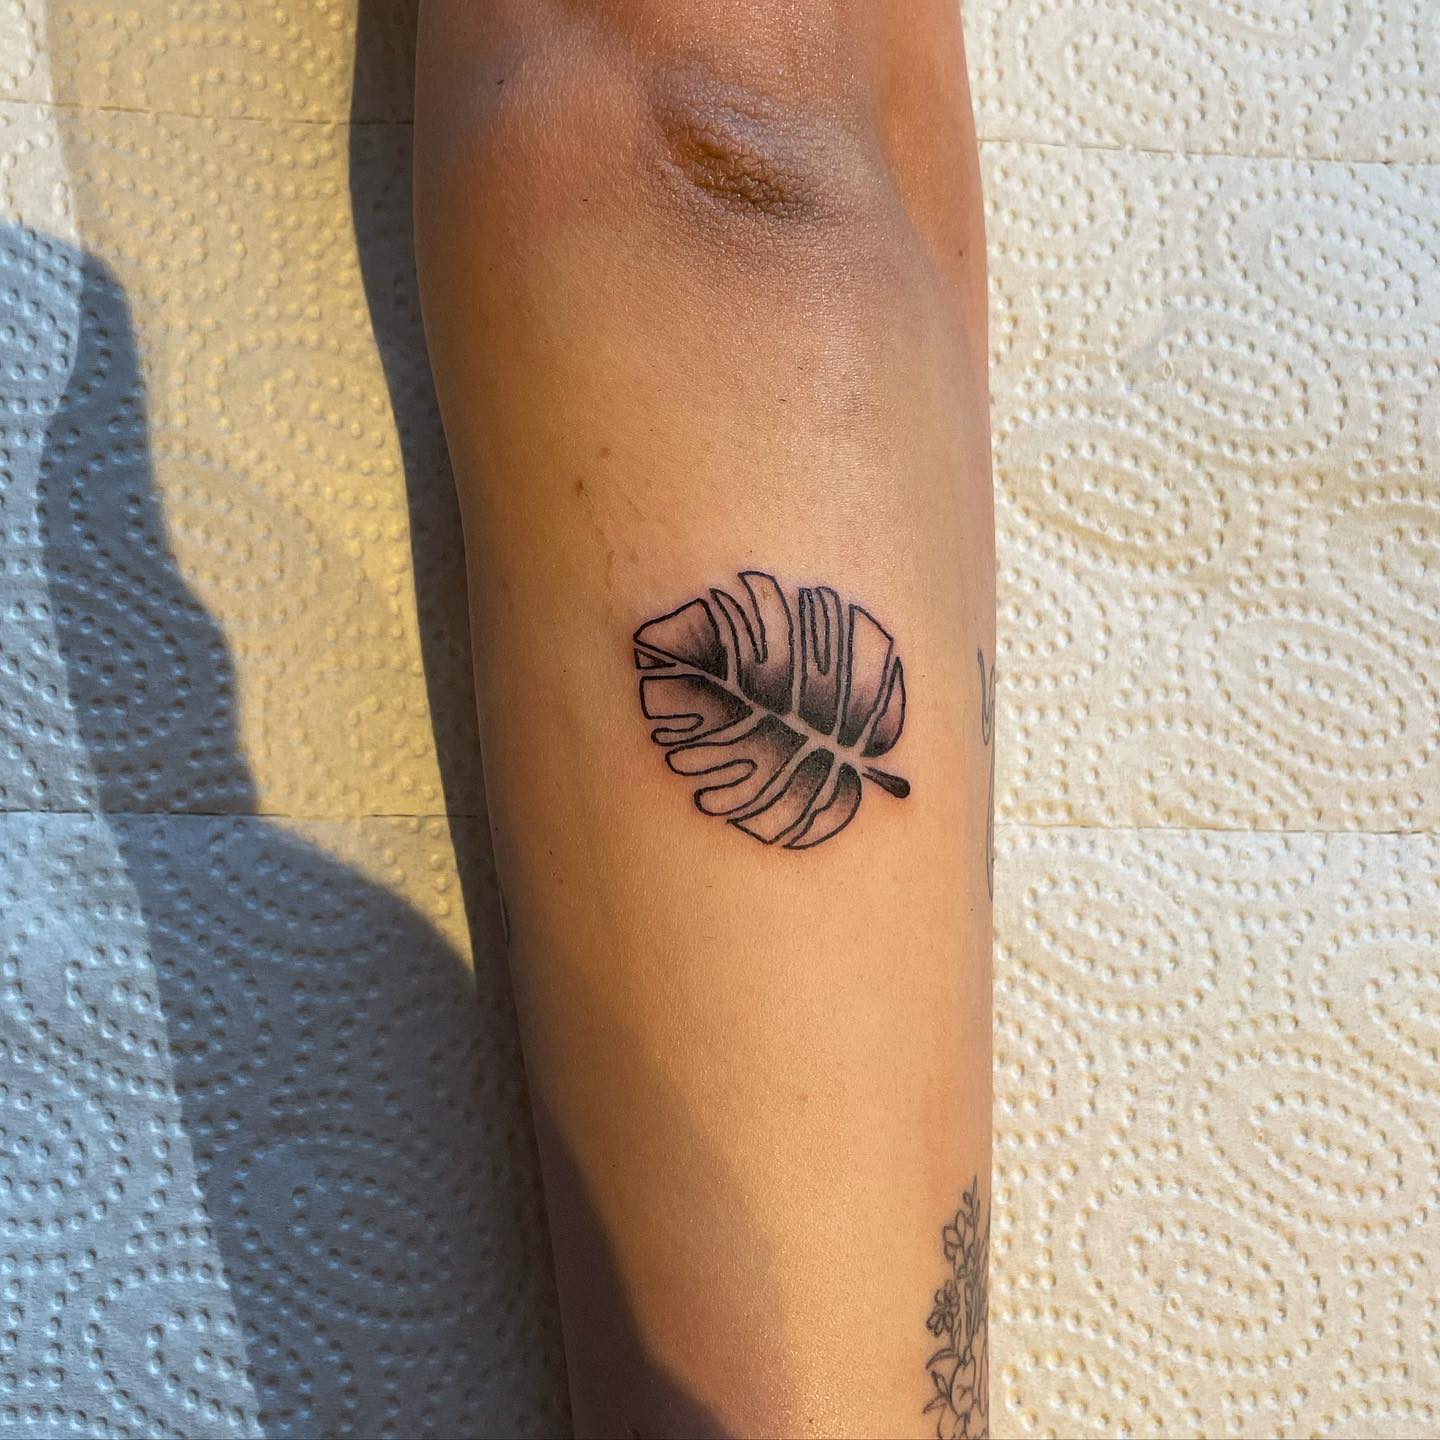 _leaf tattoo_ 
Thank you for the trust 

#flashtattoo #flashtattoodesign #tattoo